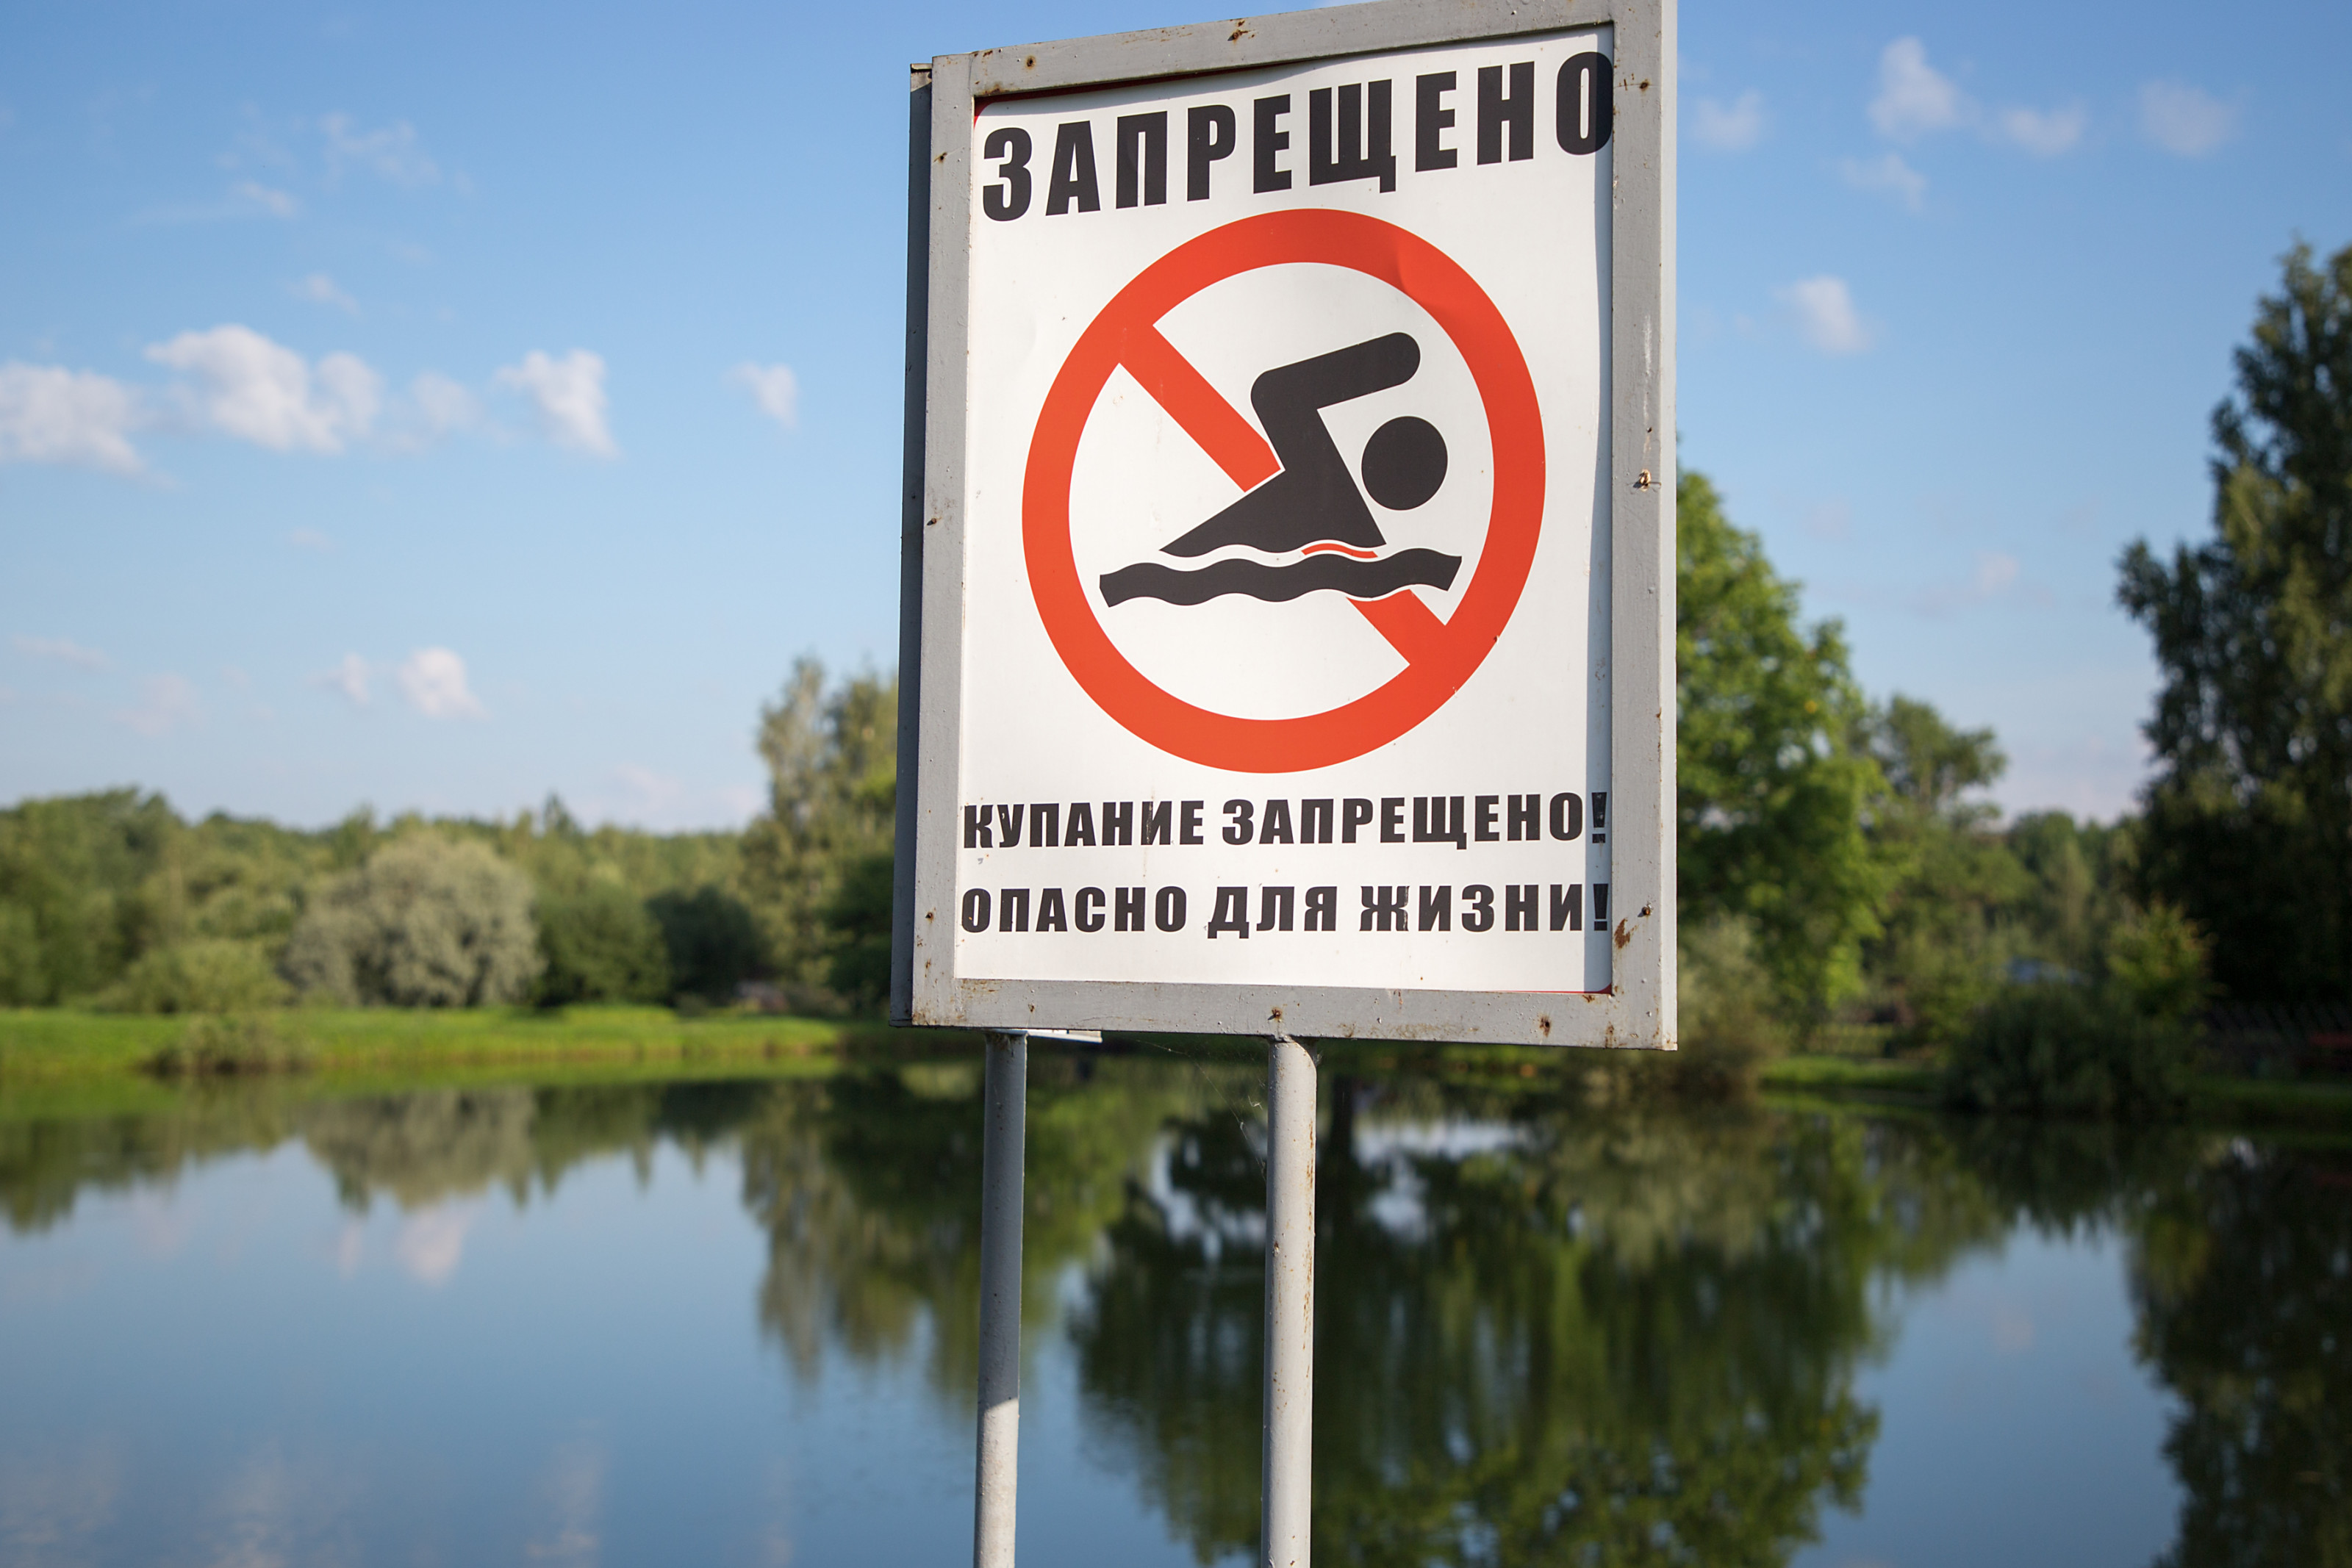 Запрет на купание. Купаться запрещено. Купание запрещено табличка. Знаки запрещающие купание в водоемах. Купаться запрещено опасно для жизни.